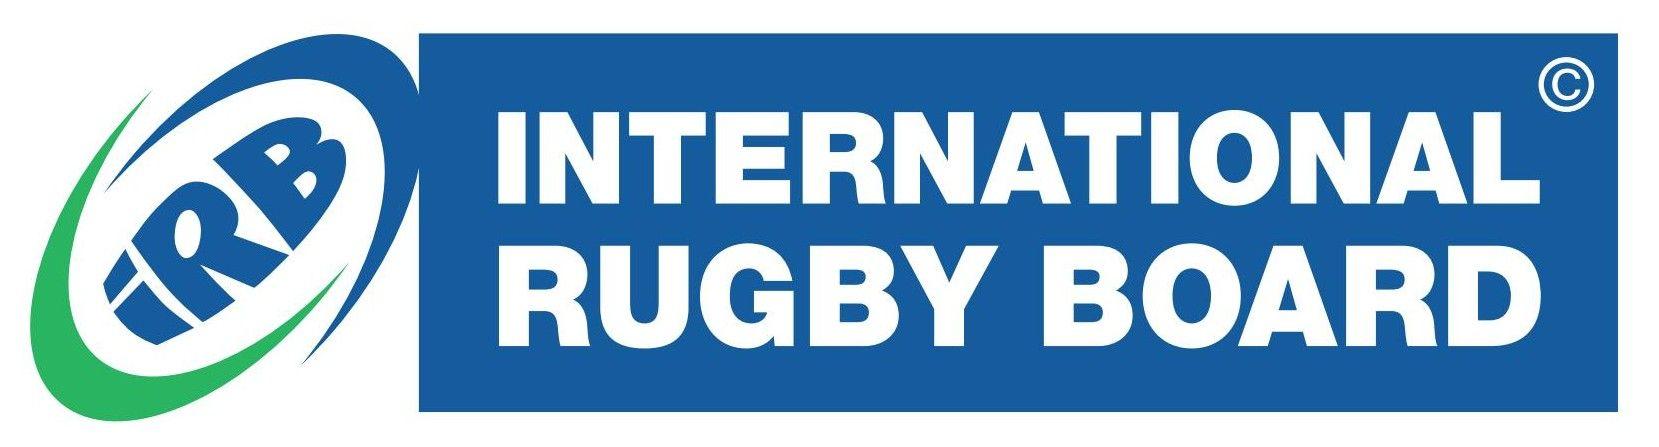 IRB Logo - International Rugby Board (IRB) Logo [EPS File] - Brand Emblems ...